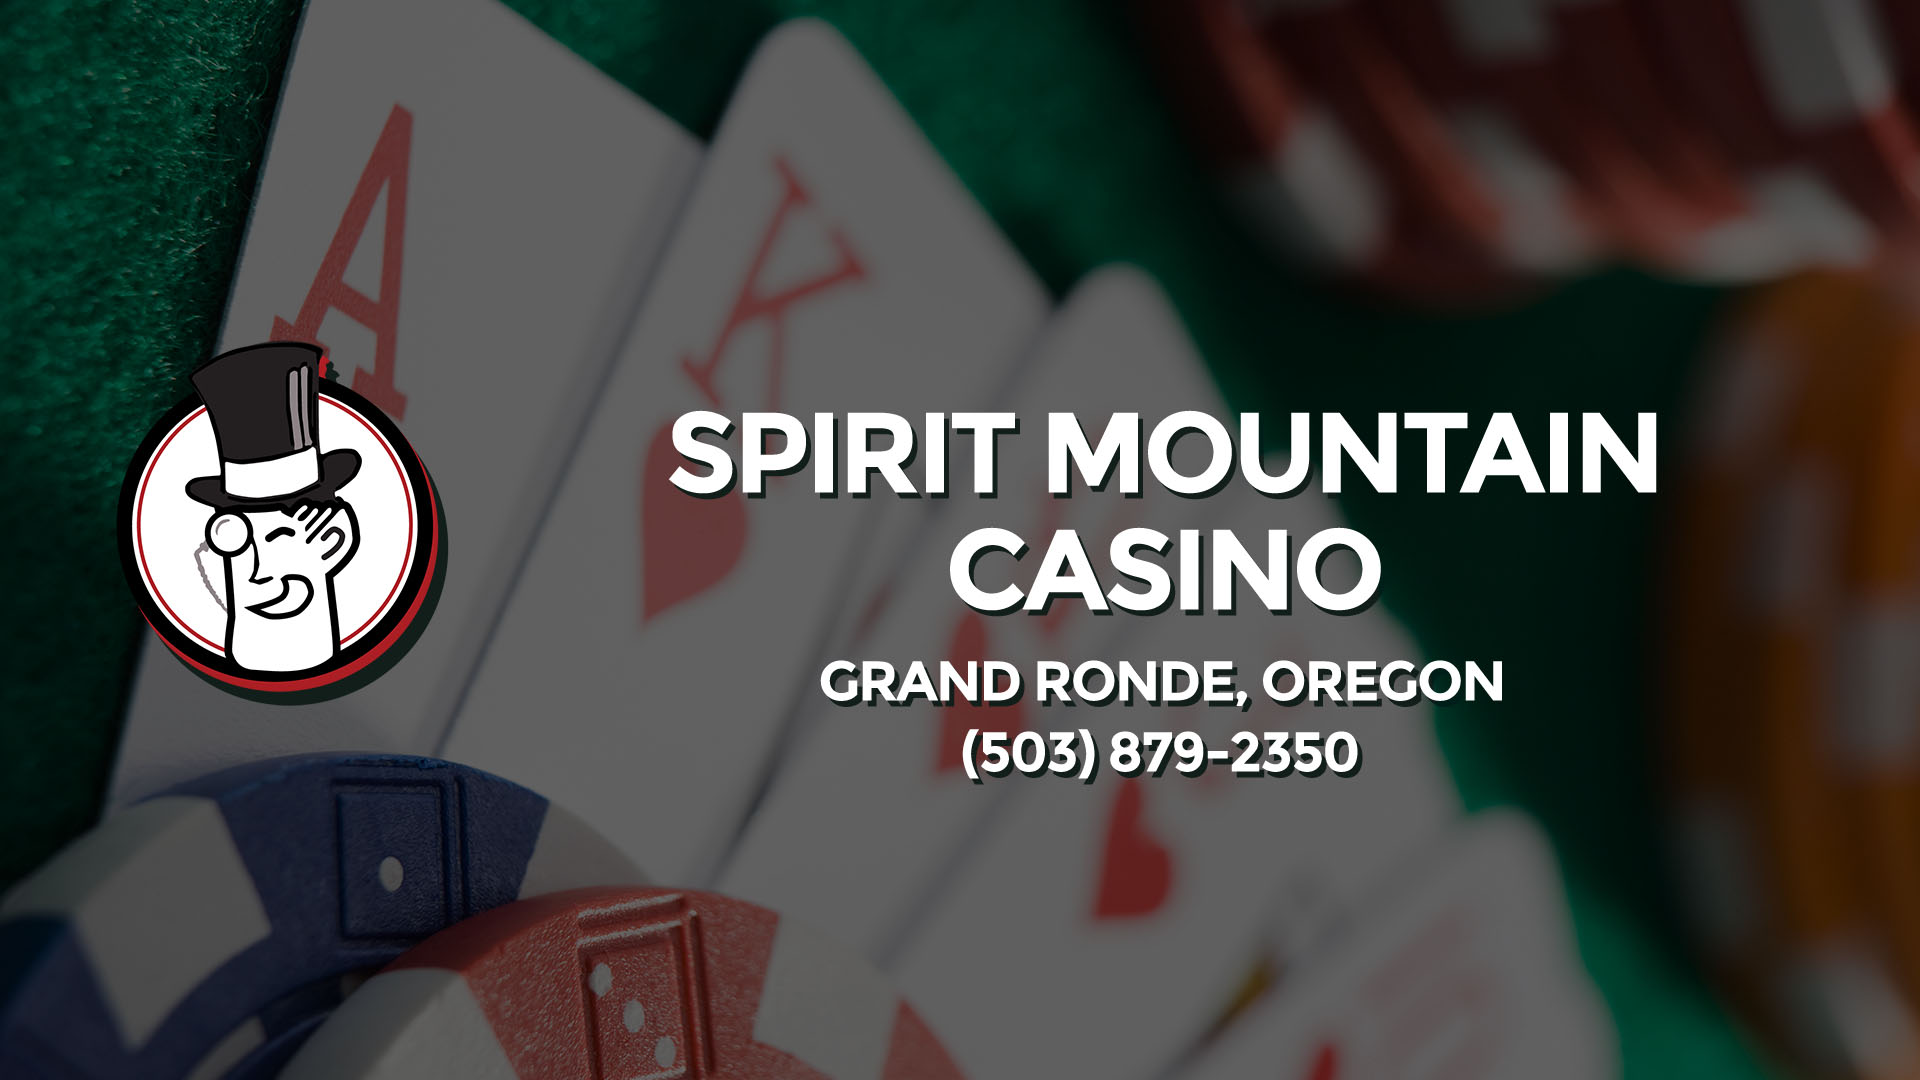 spirit mountain casino 2018 musical entertainment